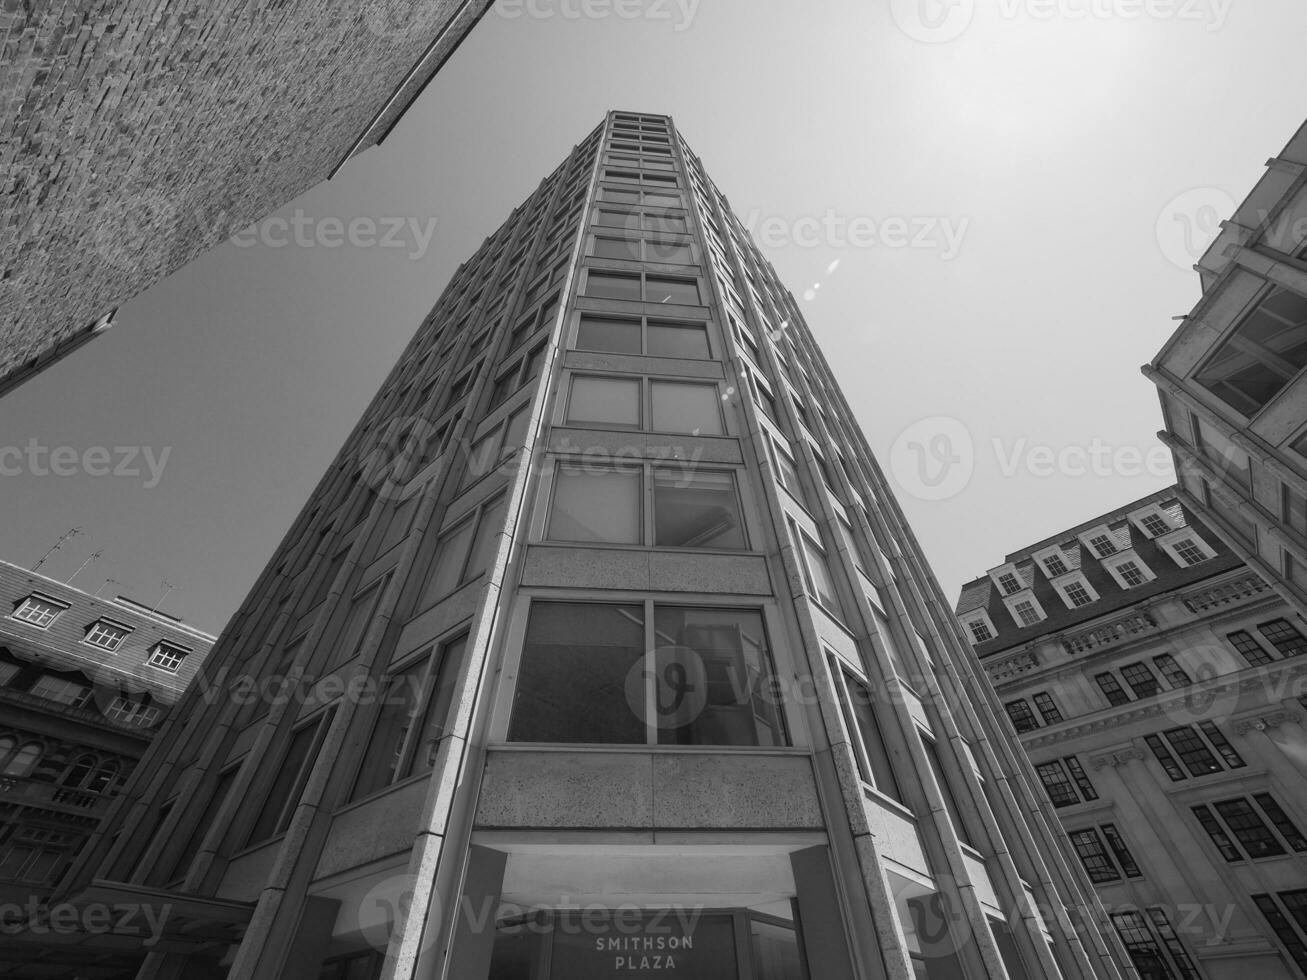 Economist Building in bw in London photo